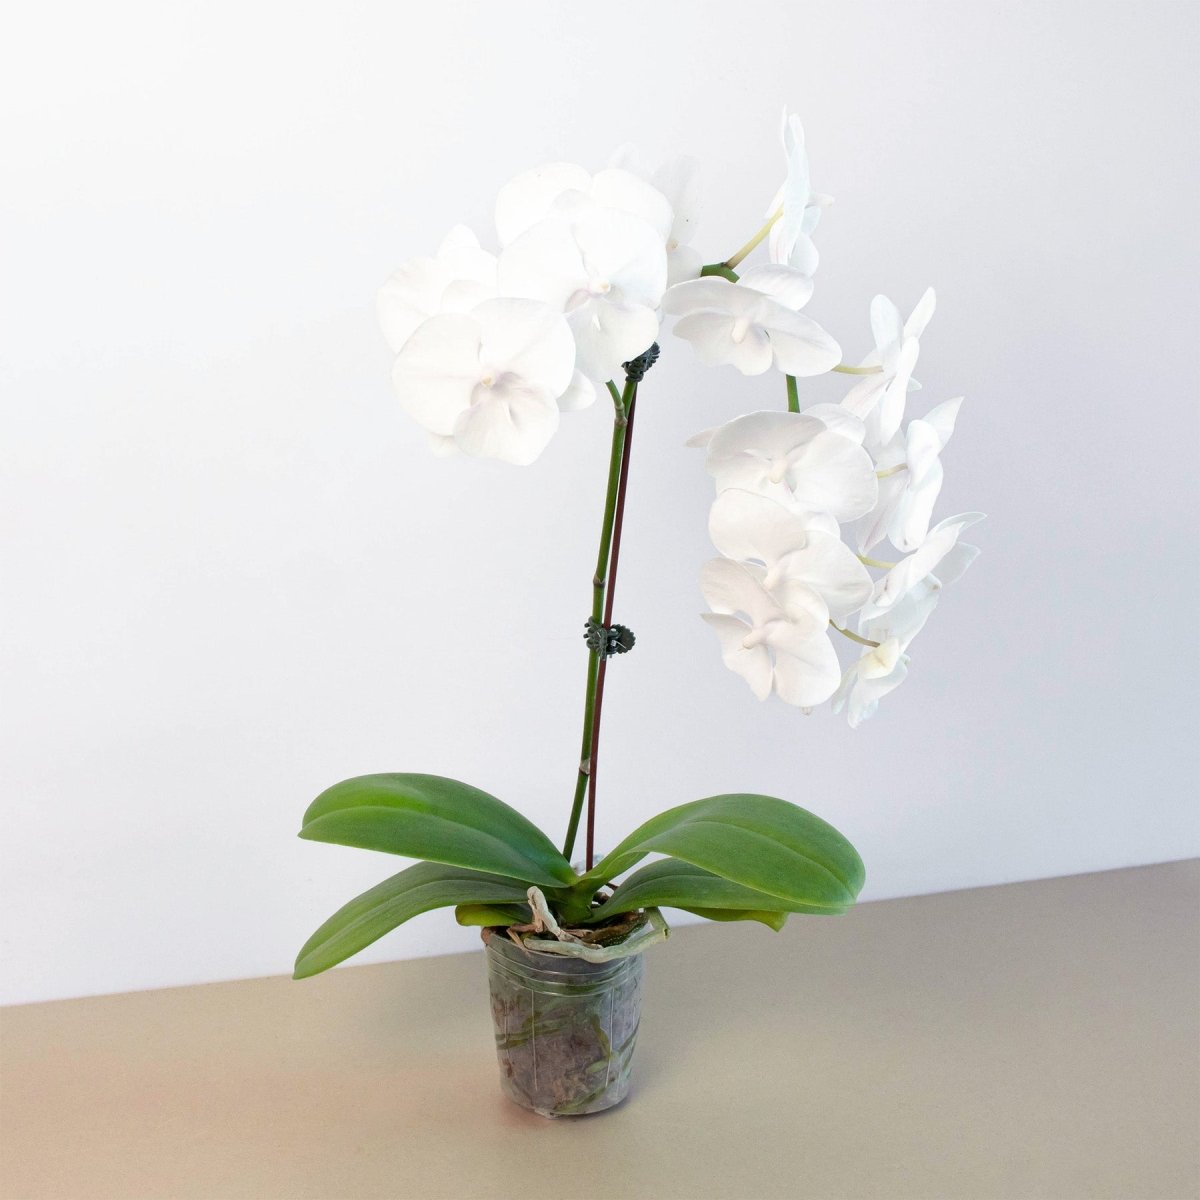 lily & onyx Orchid 'White Phalaenopsis' - lily & onyx